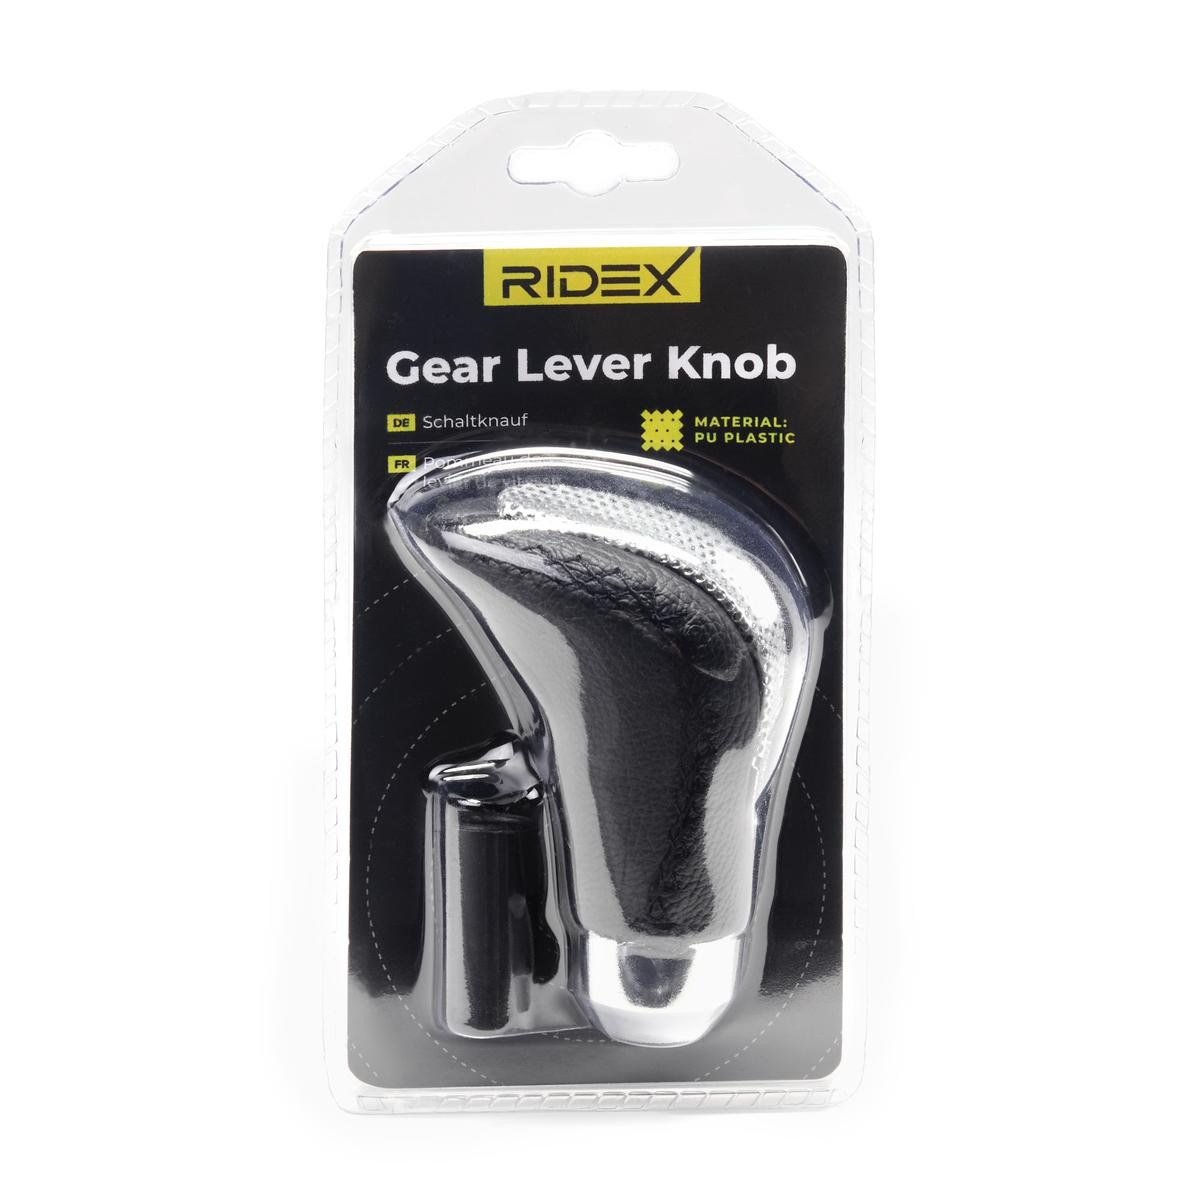 Gearbox knob RIDEX 3707A0021 for car